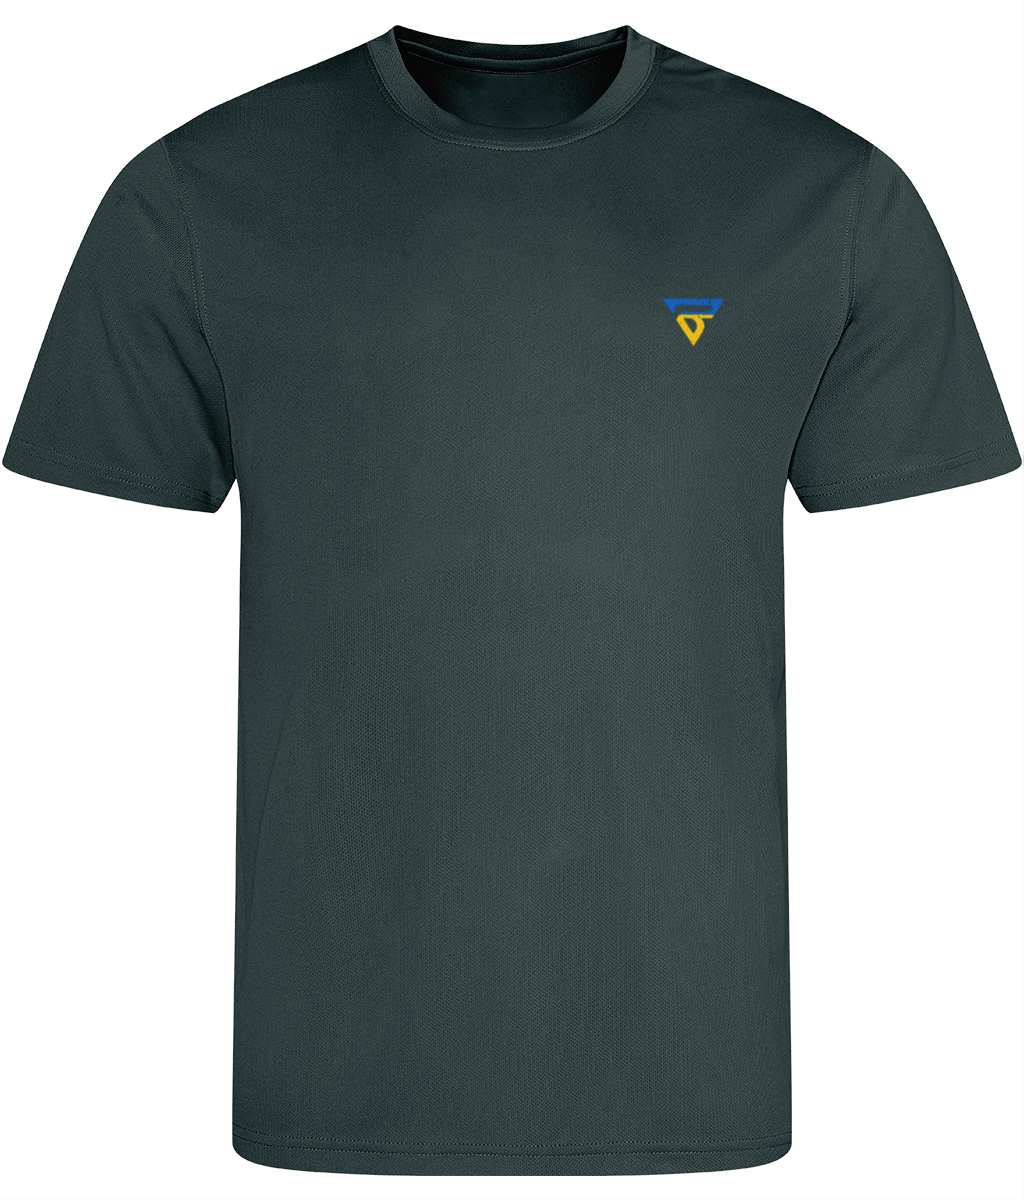 BURST Men's BRAVE 🇺🇦 Dry-Fit Workout T Shirt ( Charcoal)